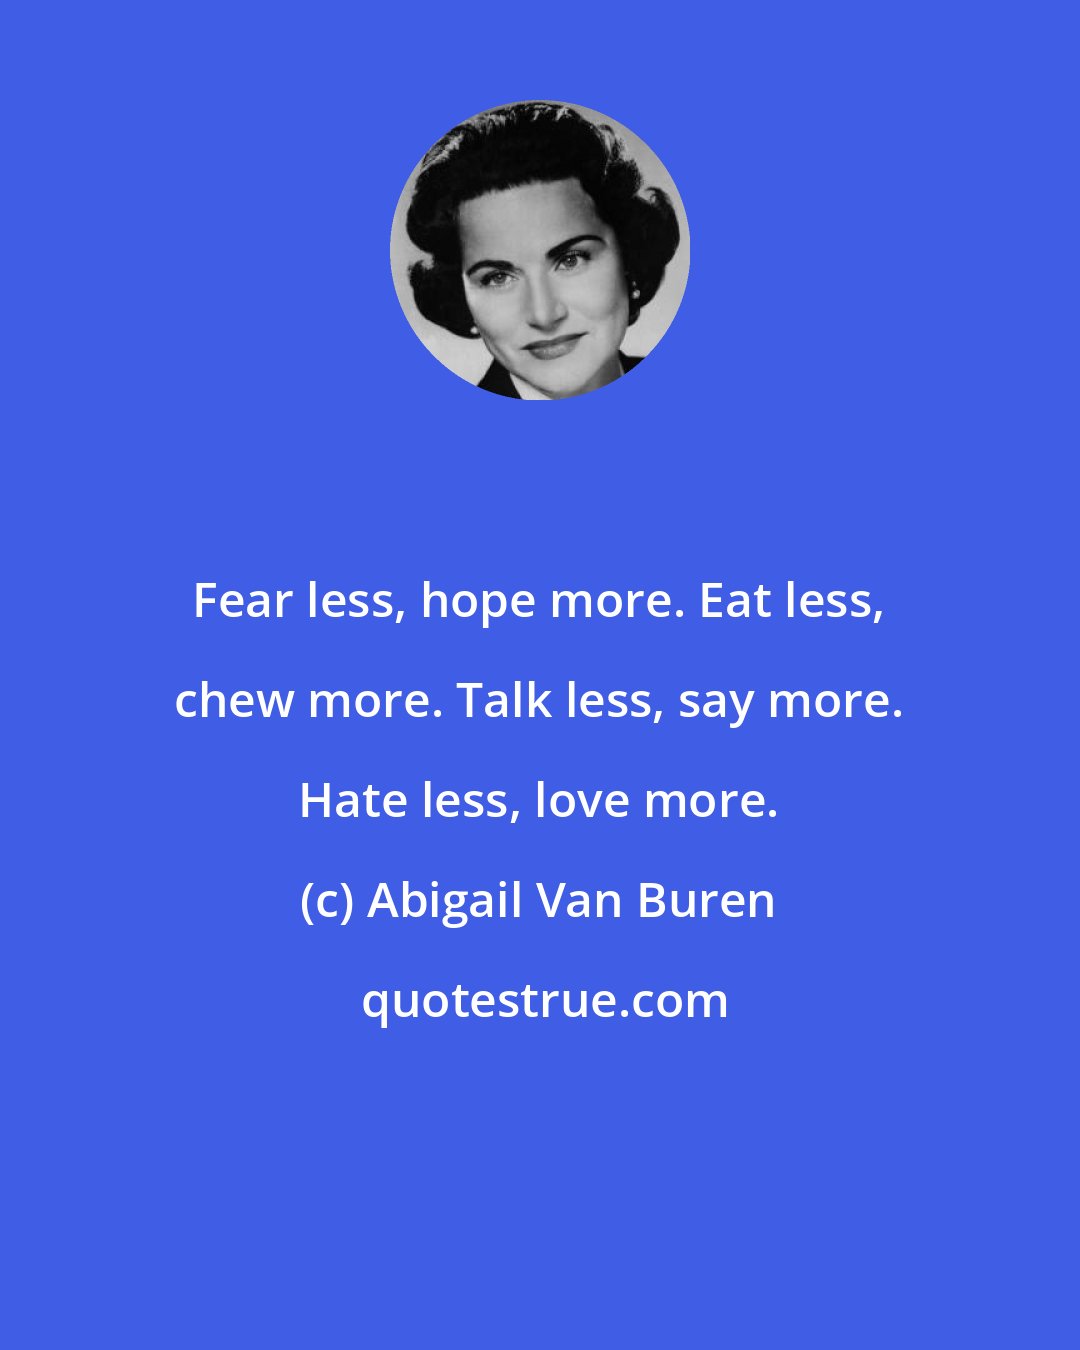 Abigail Van Buren: Fear less, hope more. Eat less, chew more. Talk less, say more. Hate less, love more.